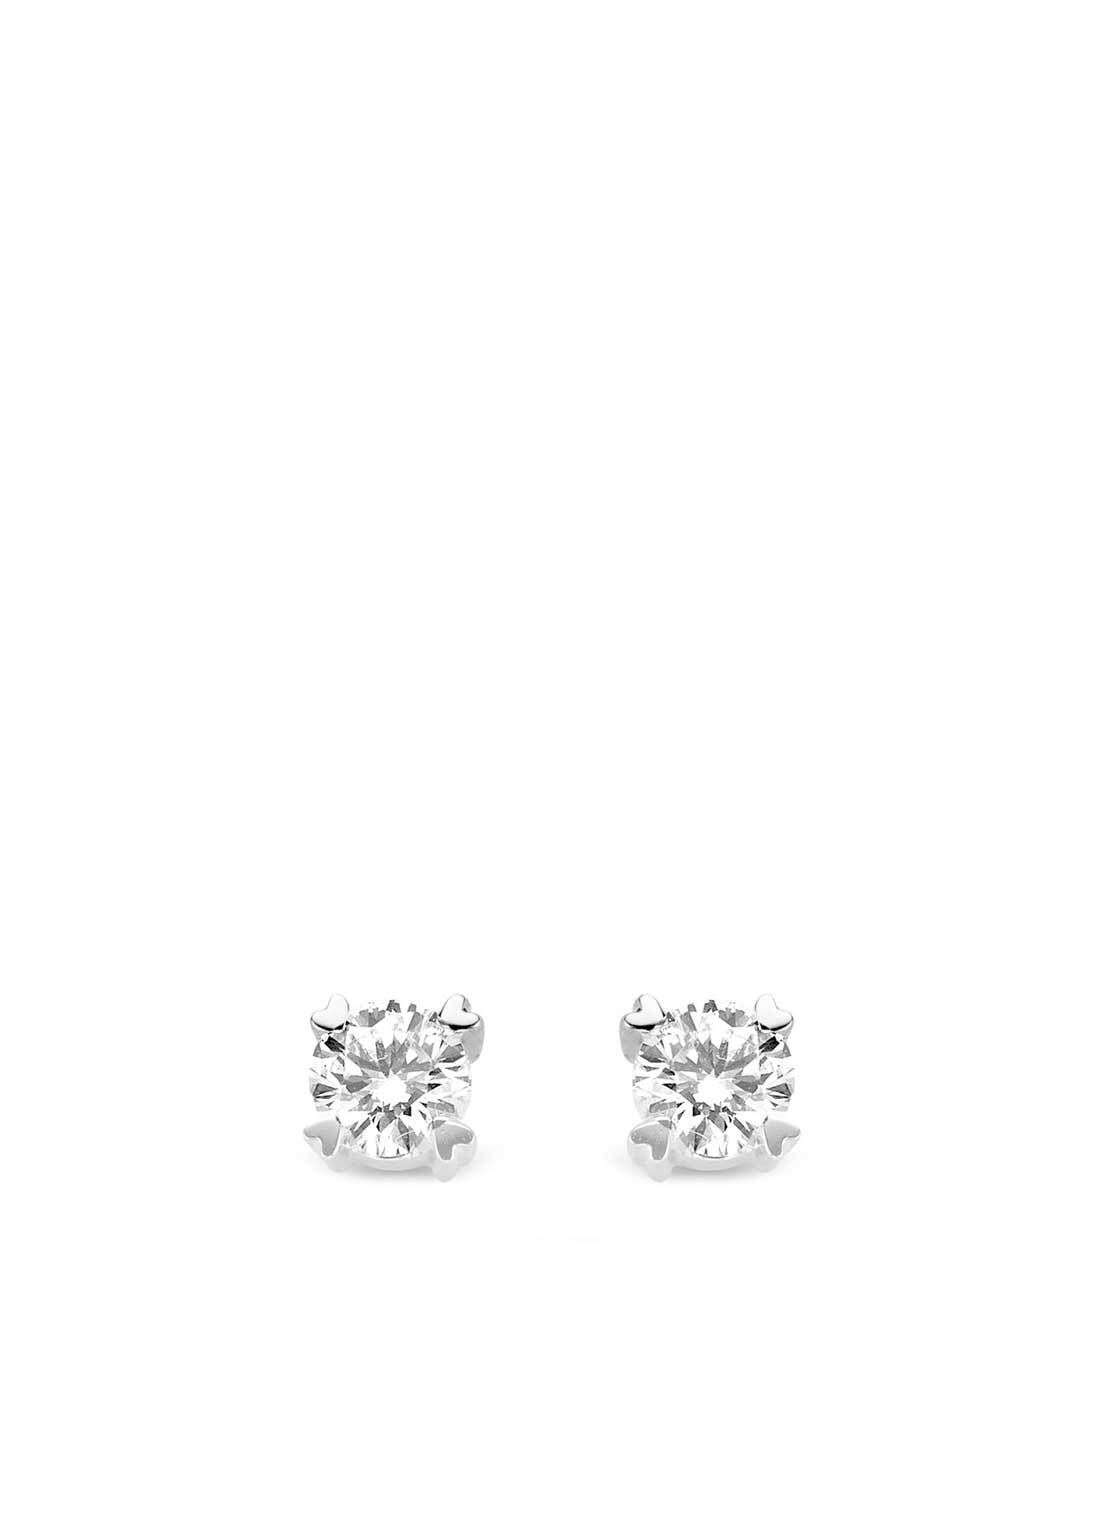 White gold ear jewelry, 0.22 CT Diamond, Hearts & Arrows